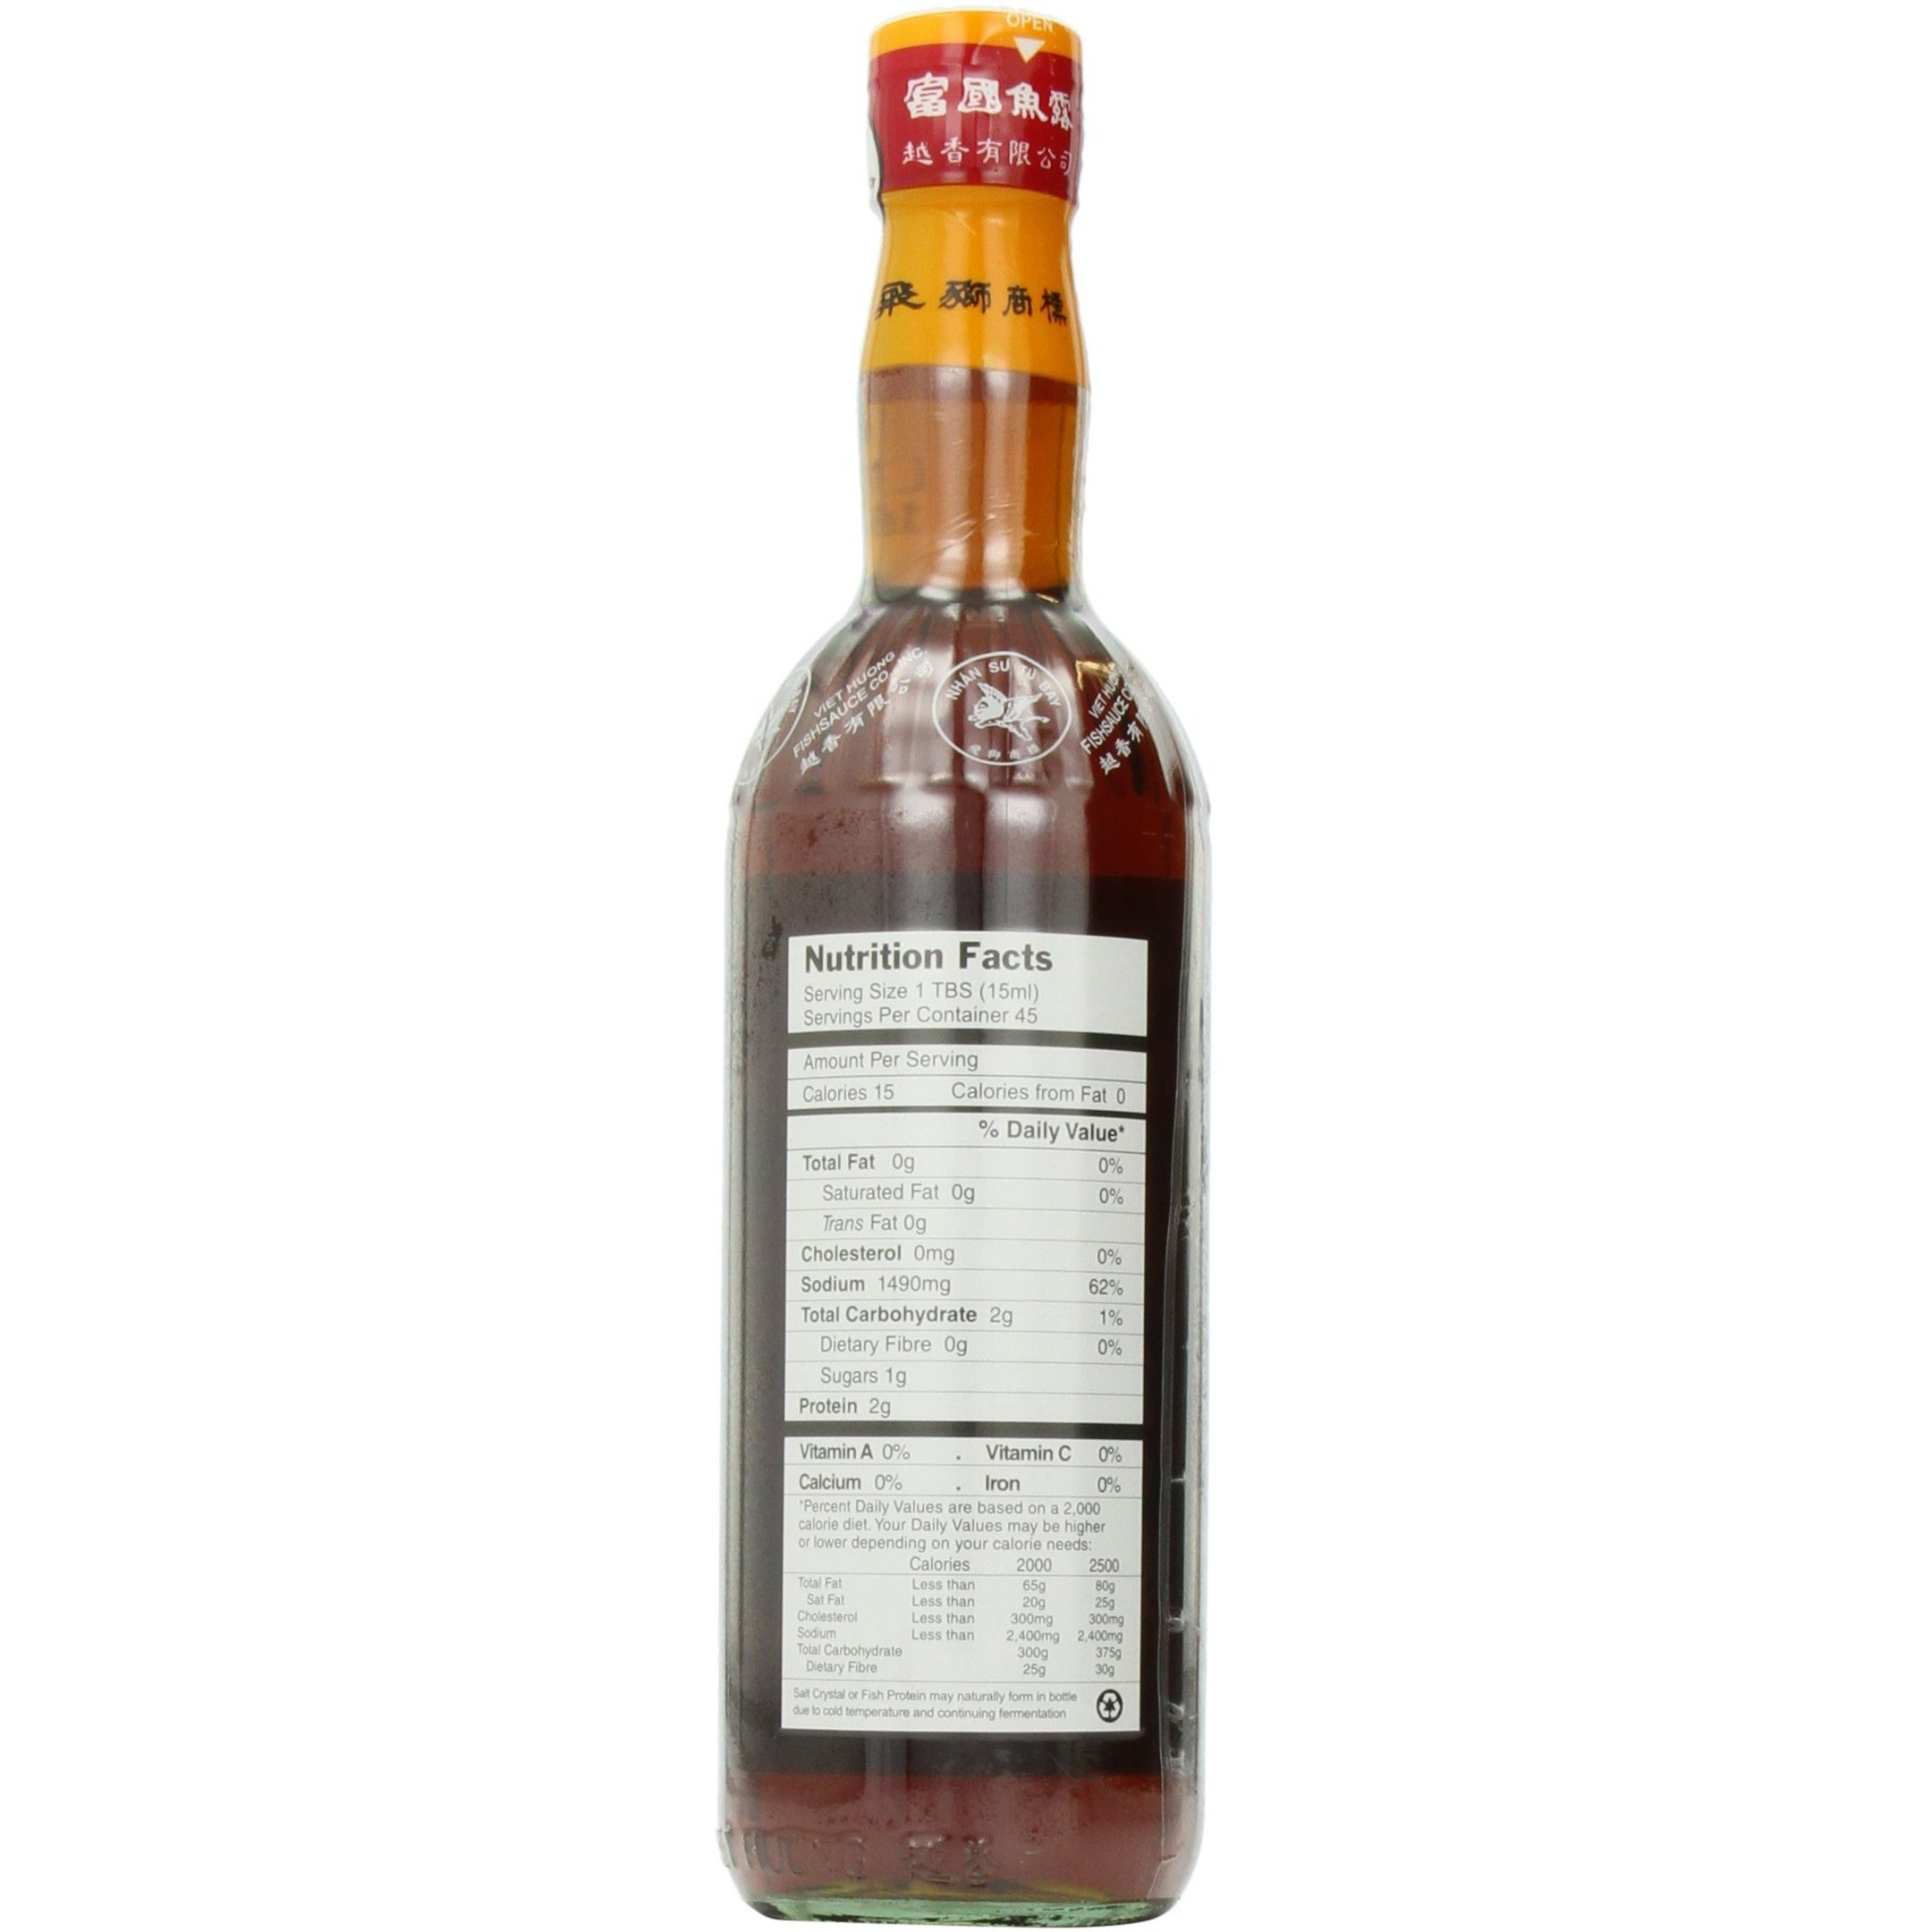 Flying Lion Vietnamese Style Fish Sauce - 24 ounce bottle